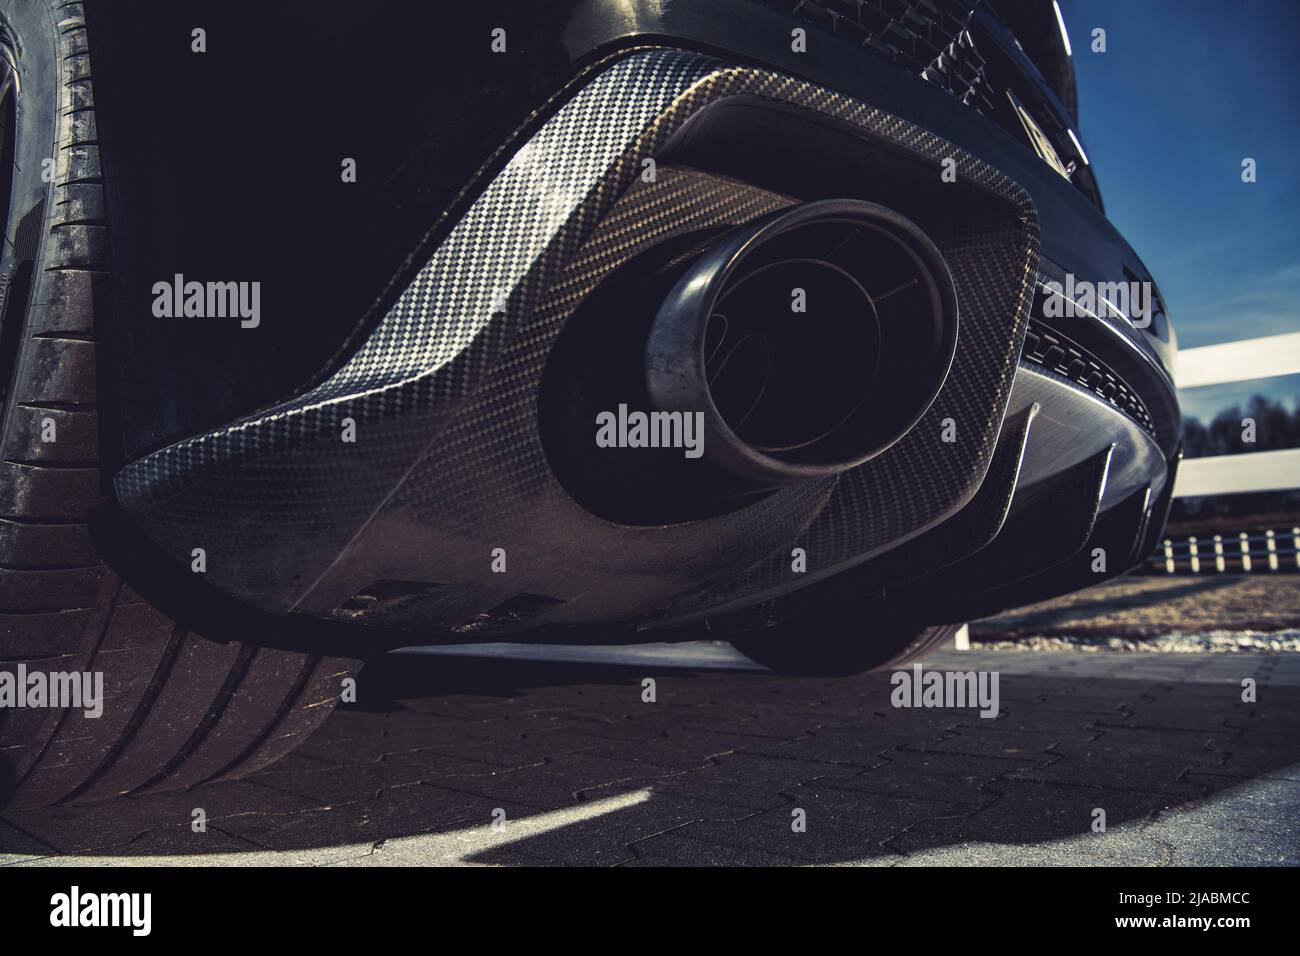 Auto diffusor -Fotos und -Bildmaterial in hoher Auflösung – Alamy